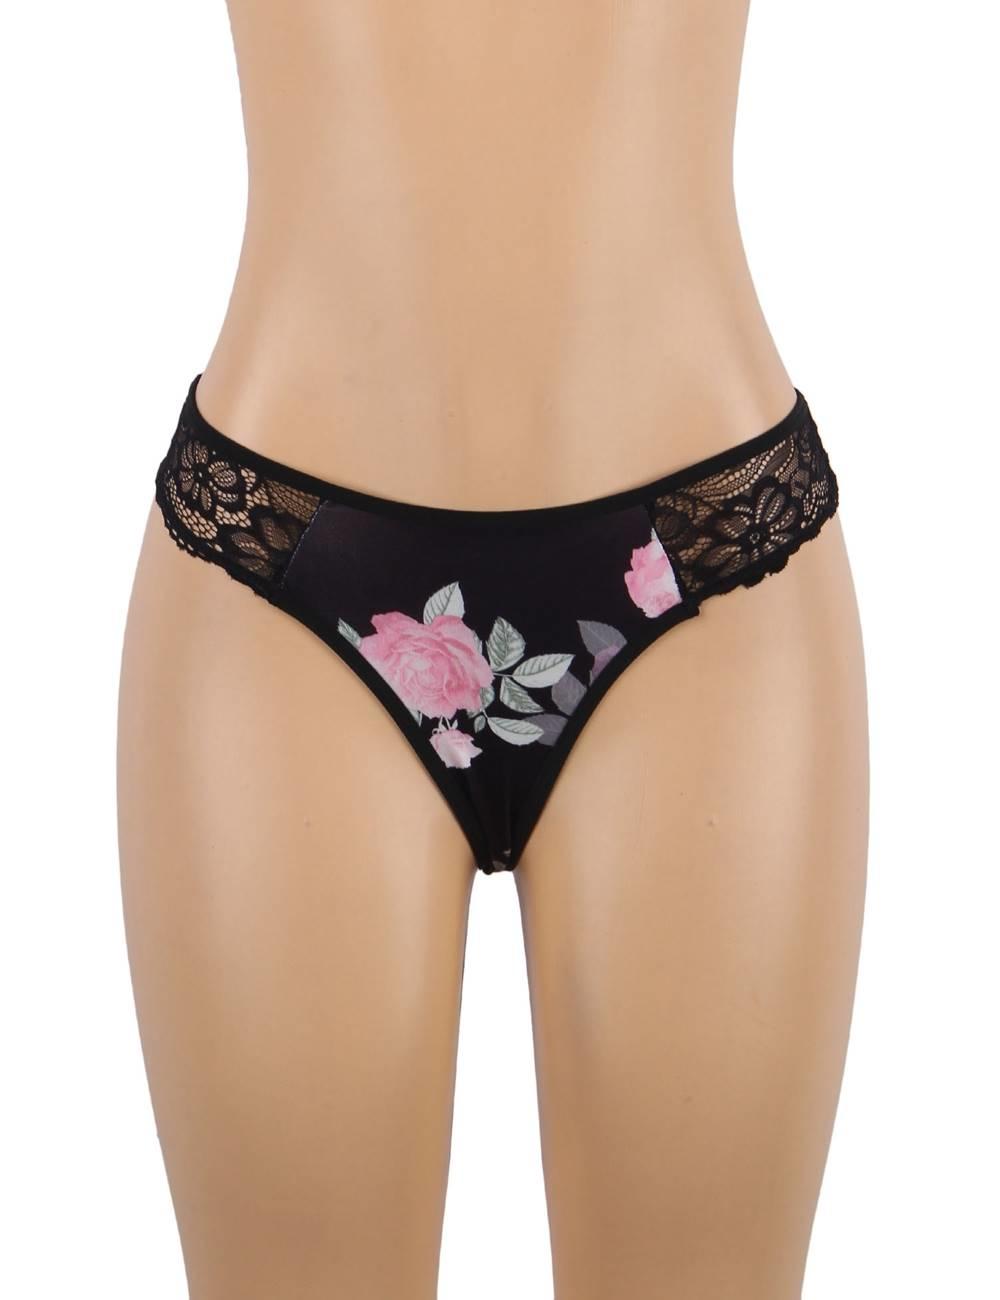 Black Floral Print Babydoll Set matching panty